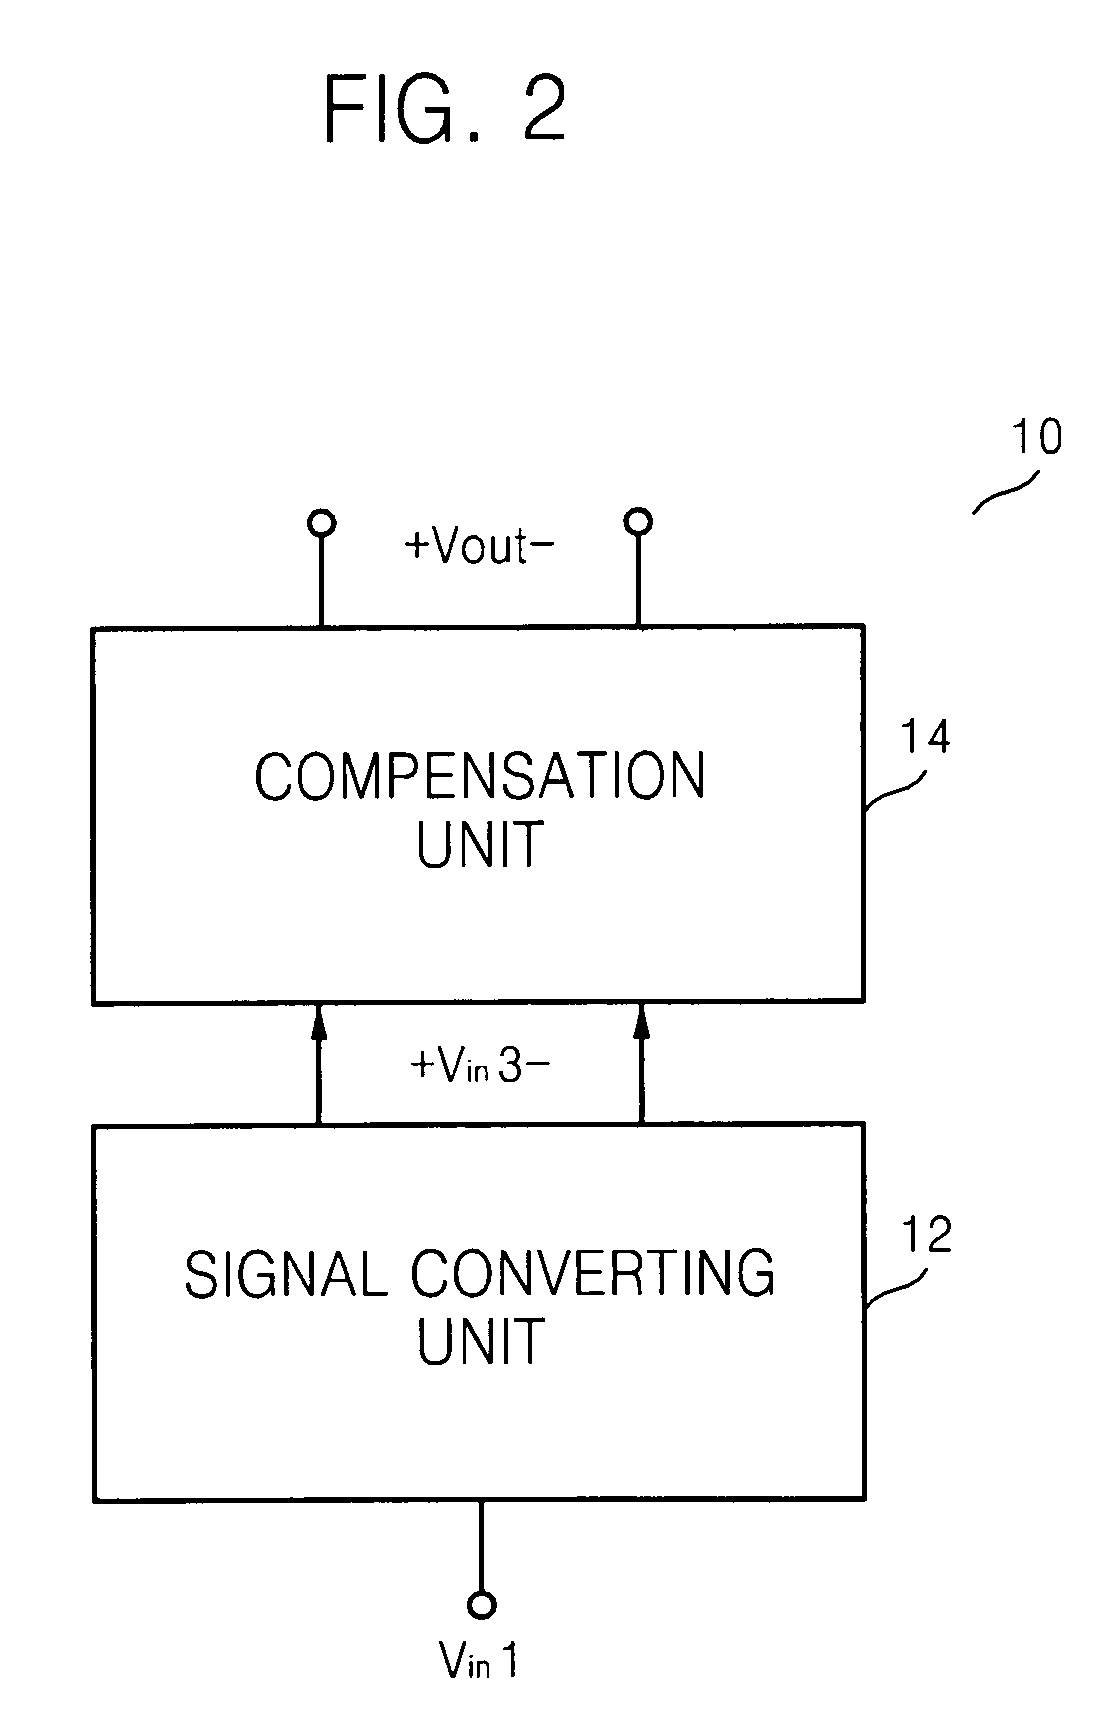 Signal converter having compensation unit